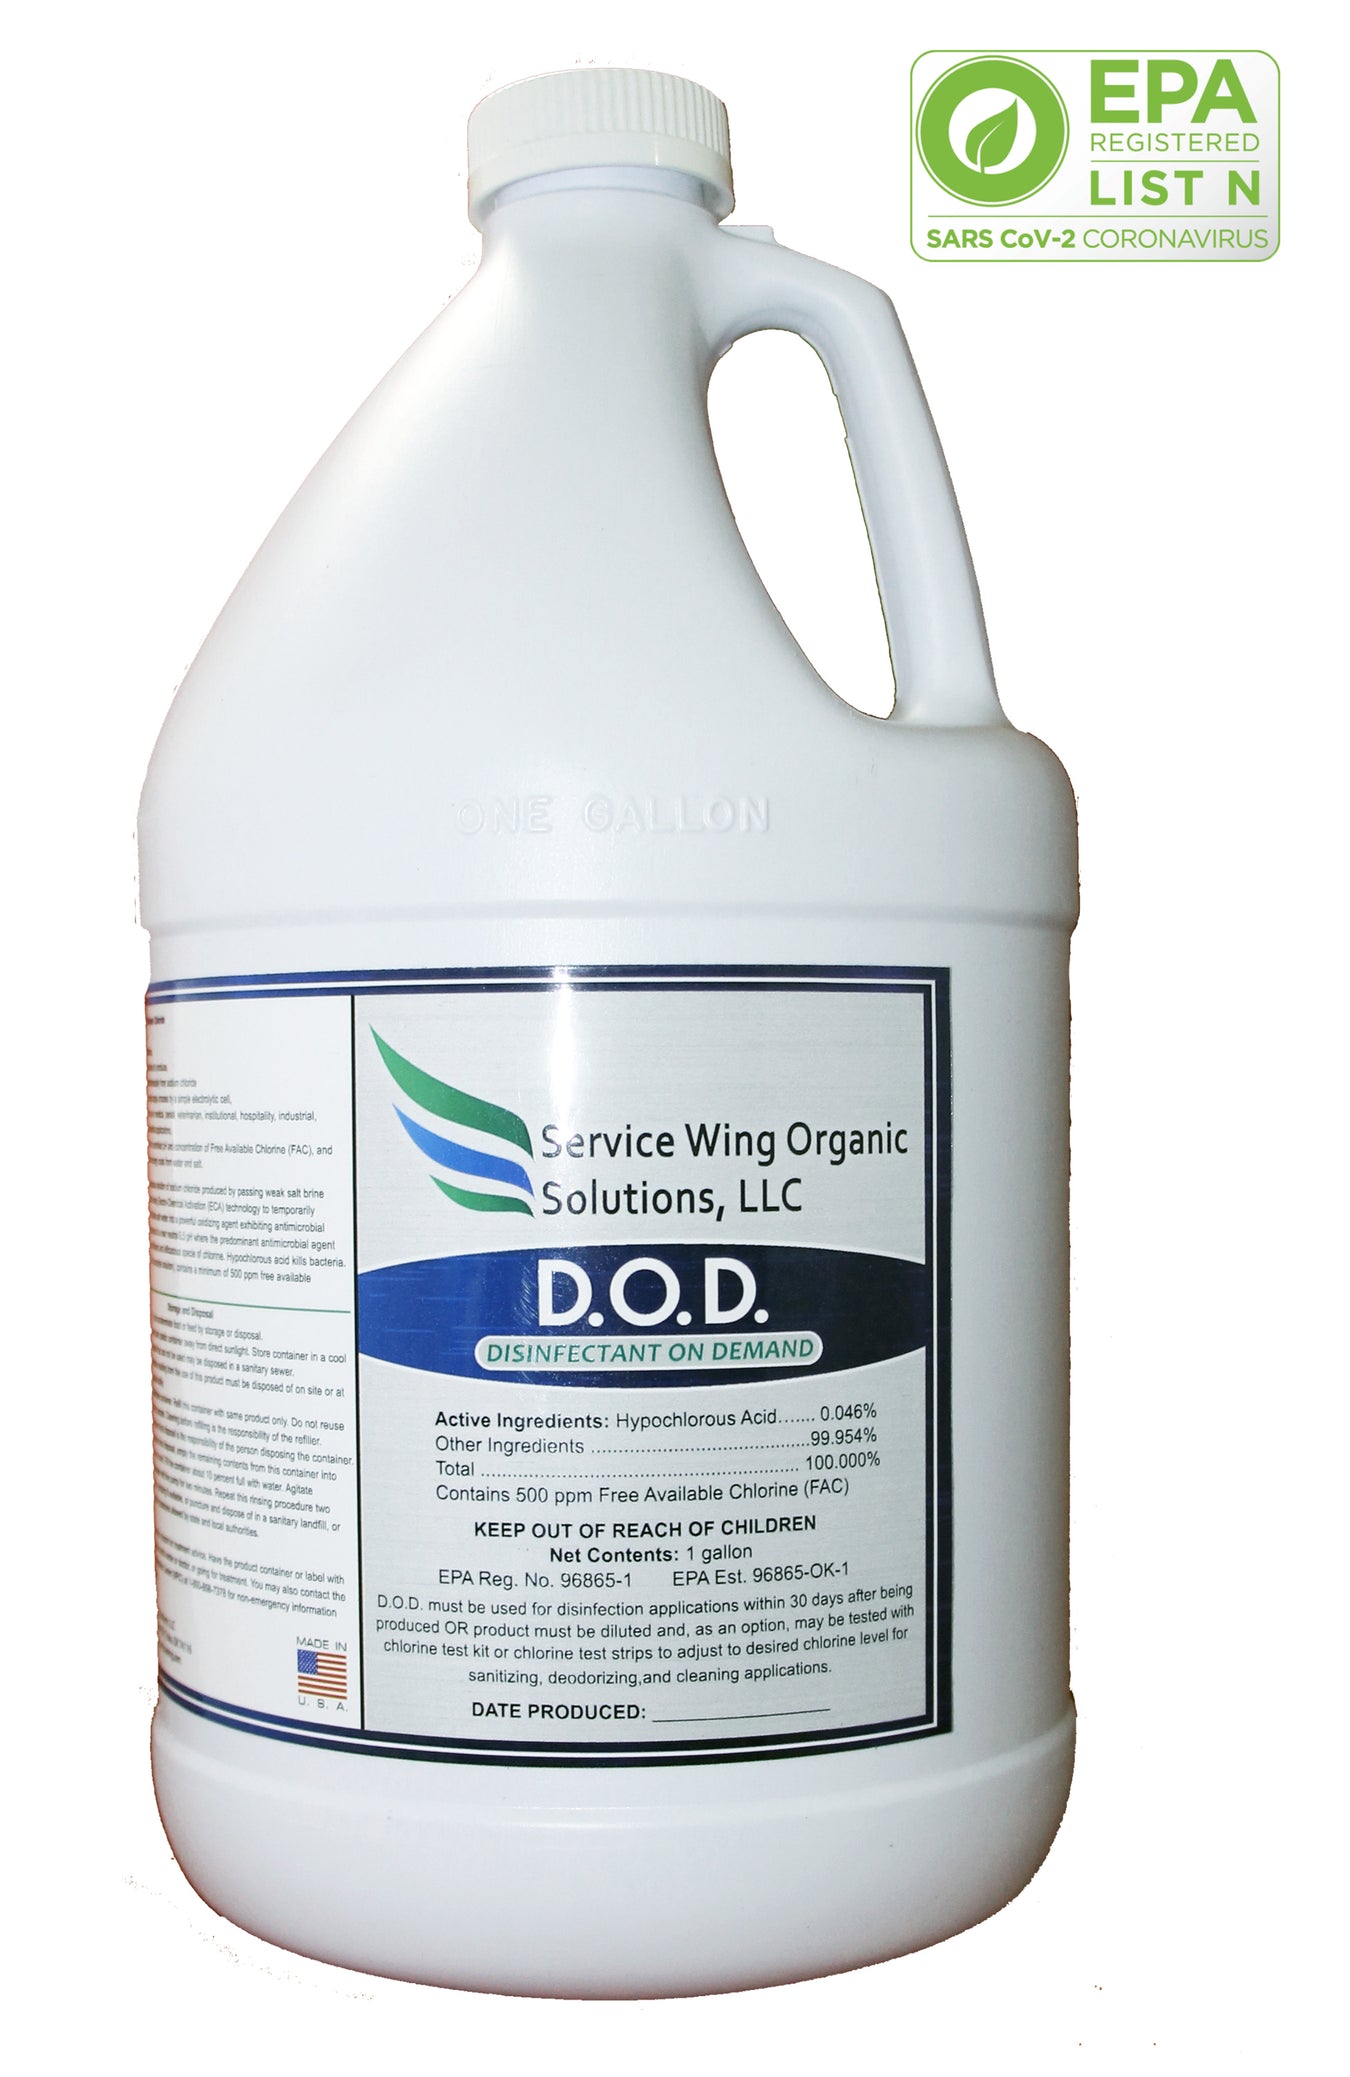 Disinfectant on Demand (D.O.D.)